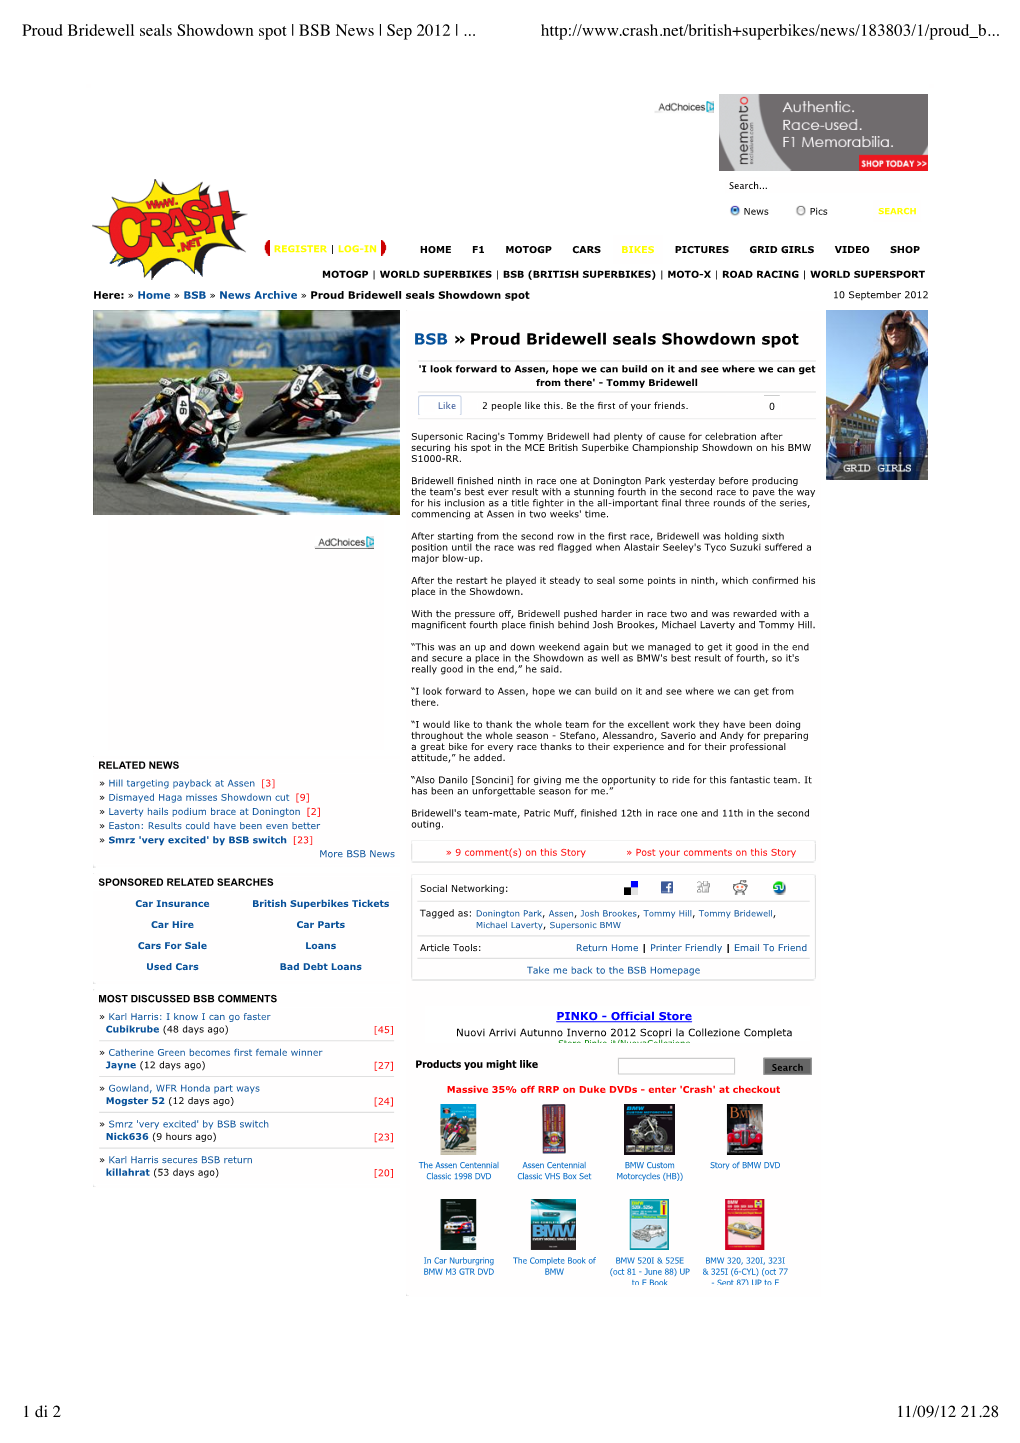 Proud Bridewell Seals Showdown Spot | BSB News | Sep 2012 | Crash.Net